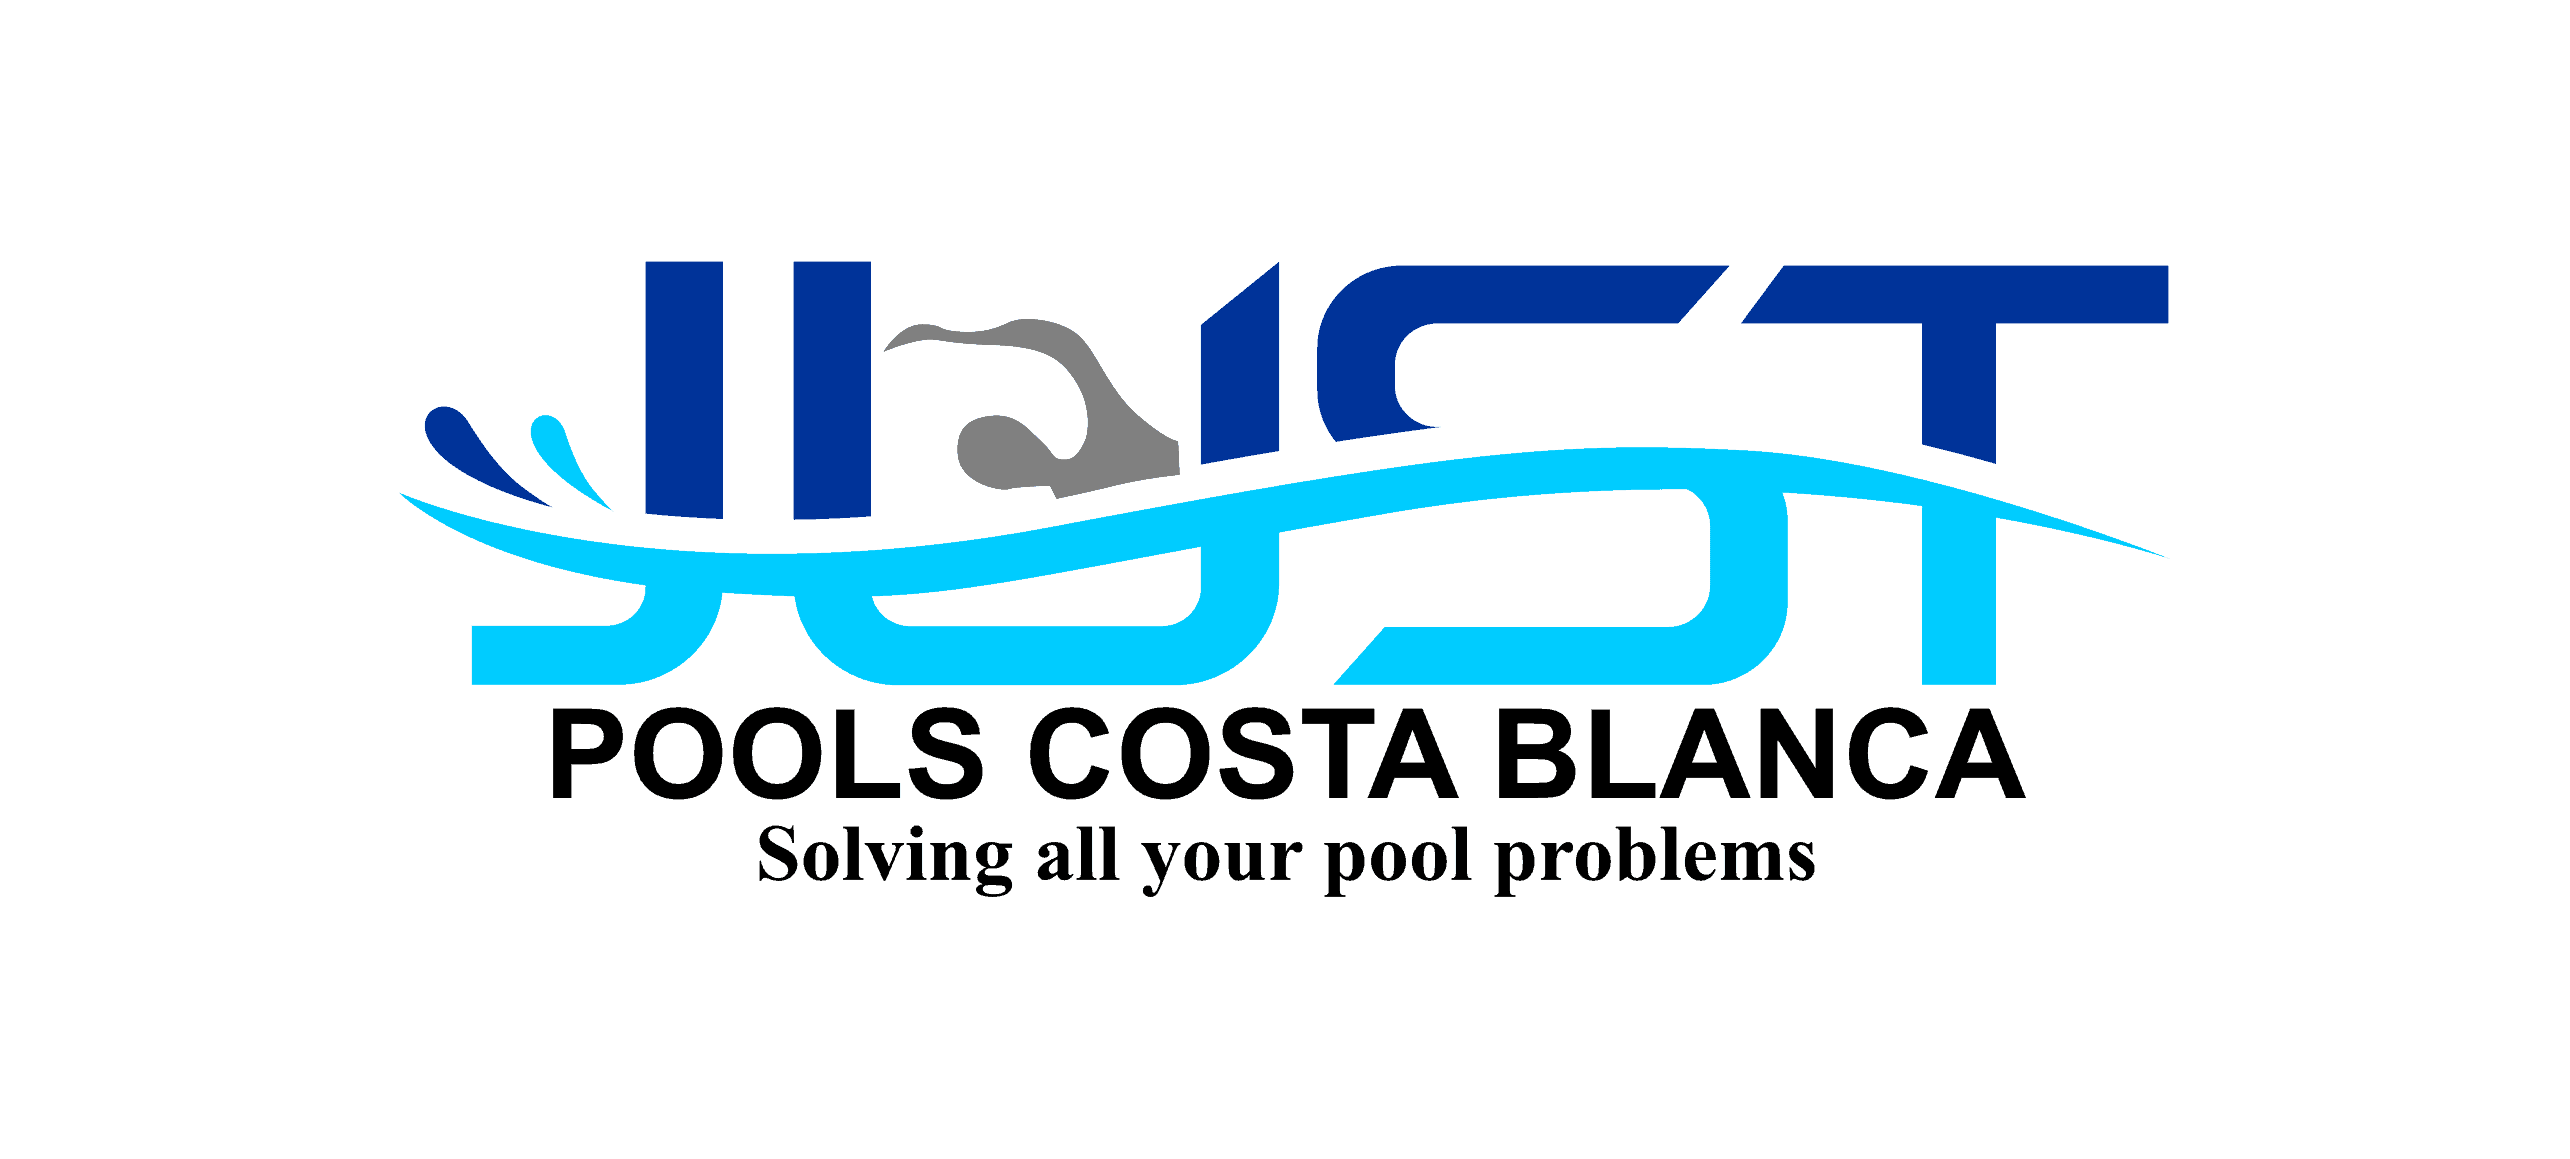 Just Pools Costa Blanca